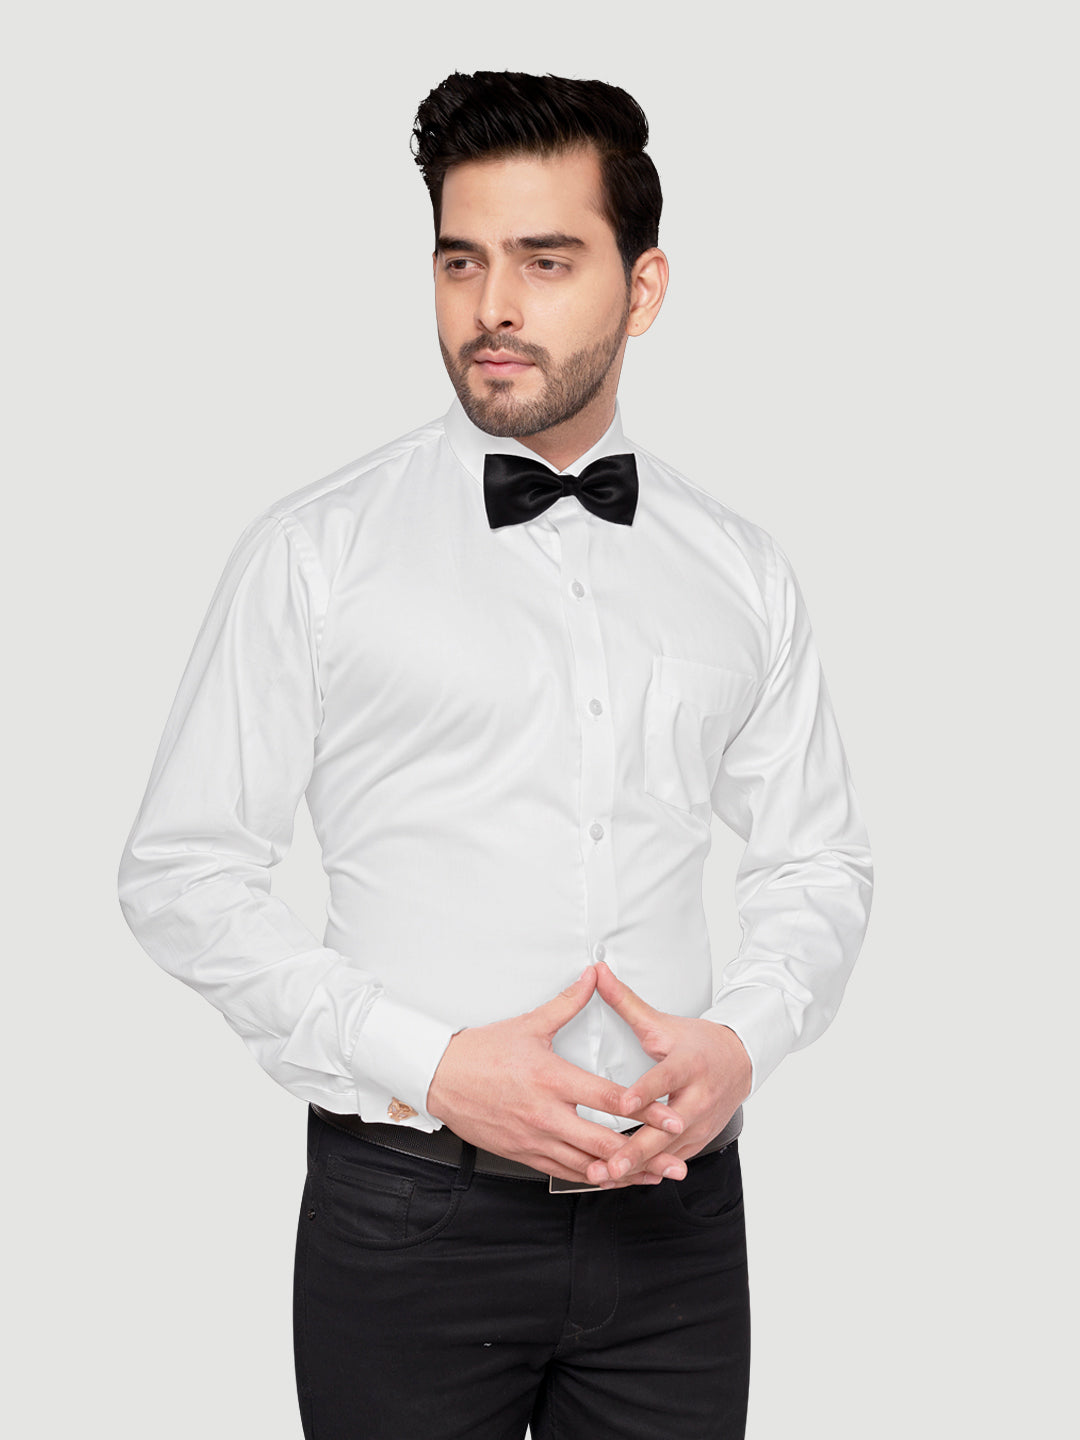 Black and White Shirts Men's Formal Cufflink Shirt White w bow